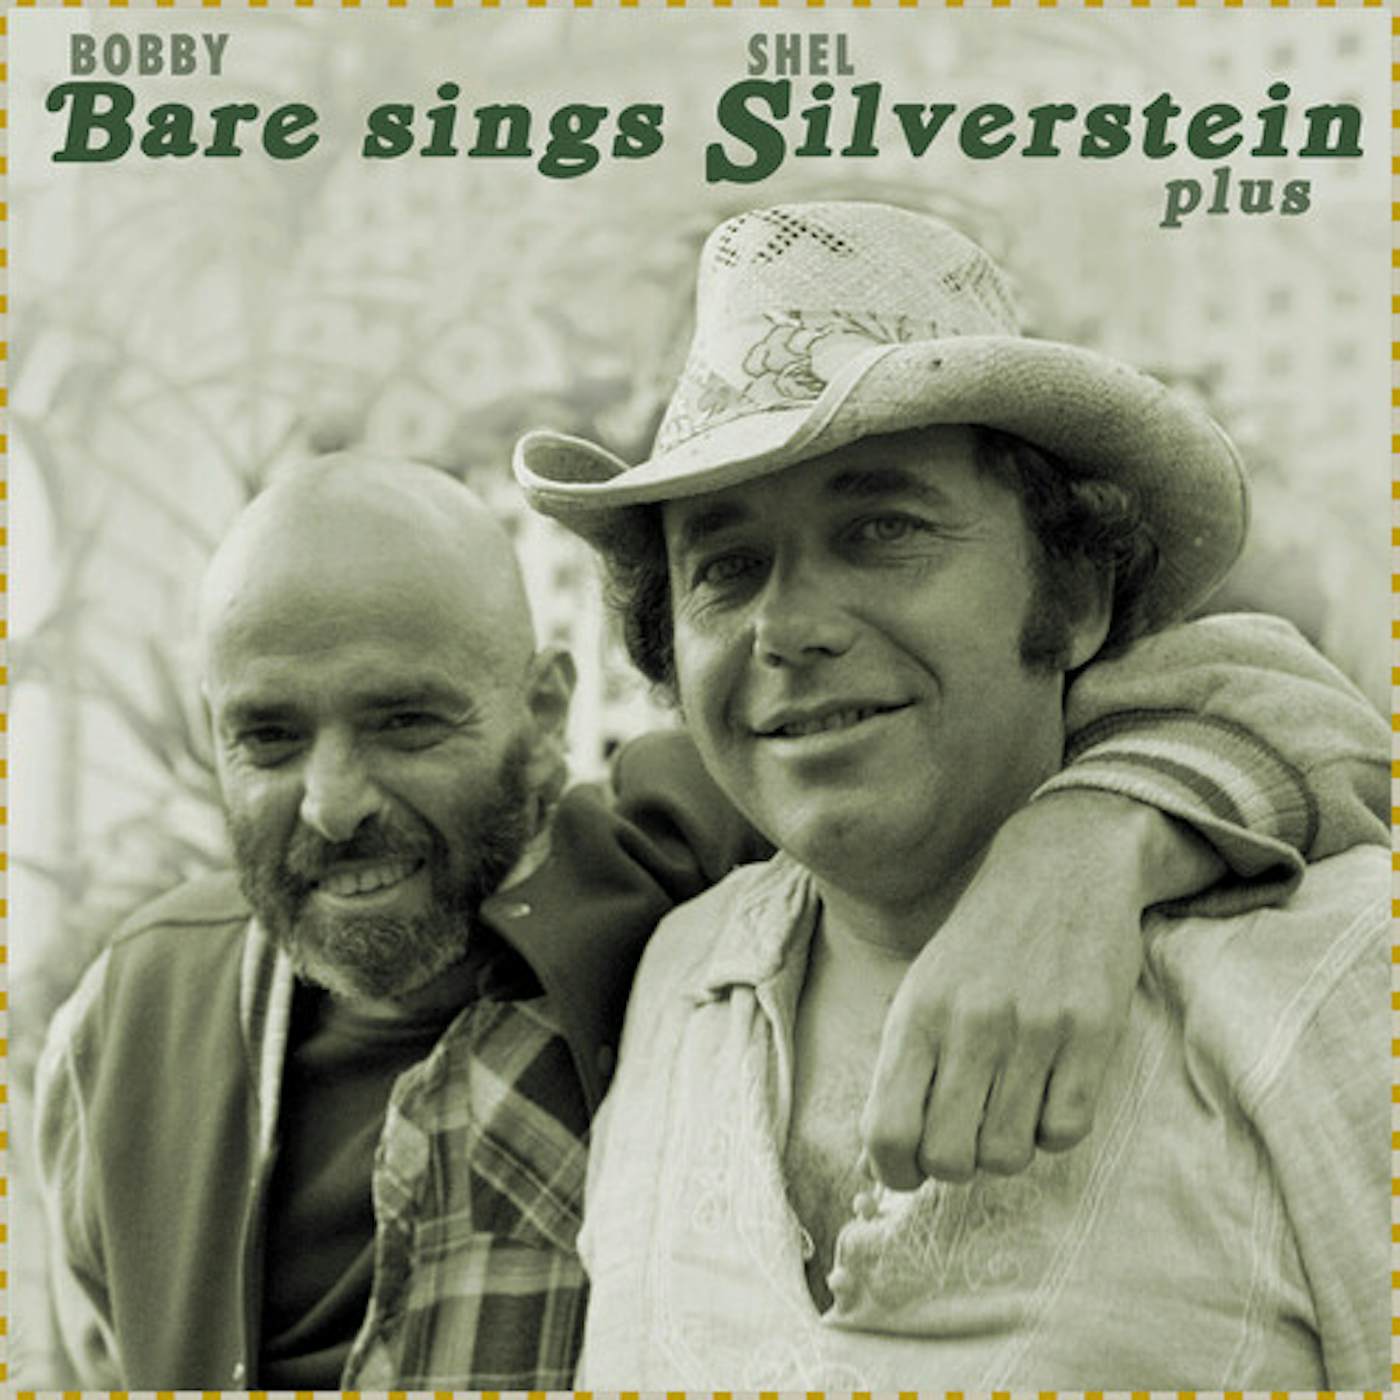 BOBBY BARE SINGS SHEL SILVERSTEIN PLUS CD